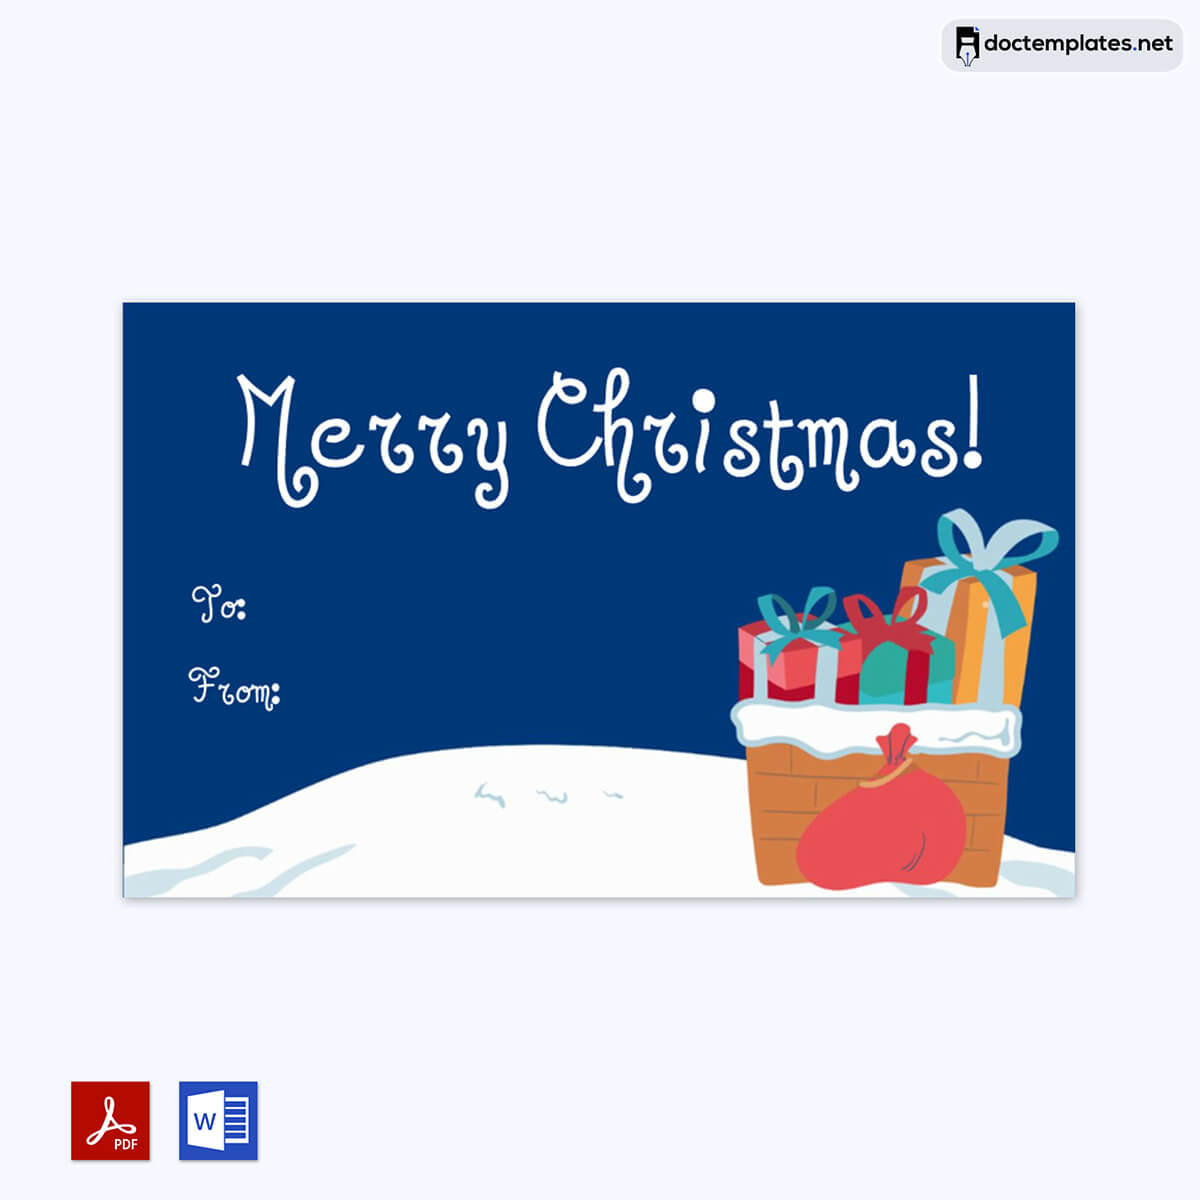 Image of Free printable gift tags PDF
Free printable gift tags PDF
01